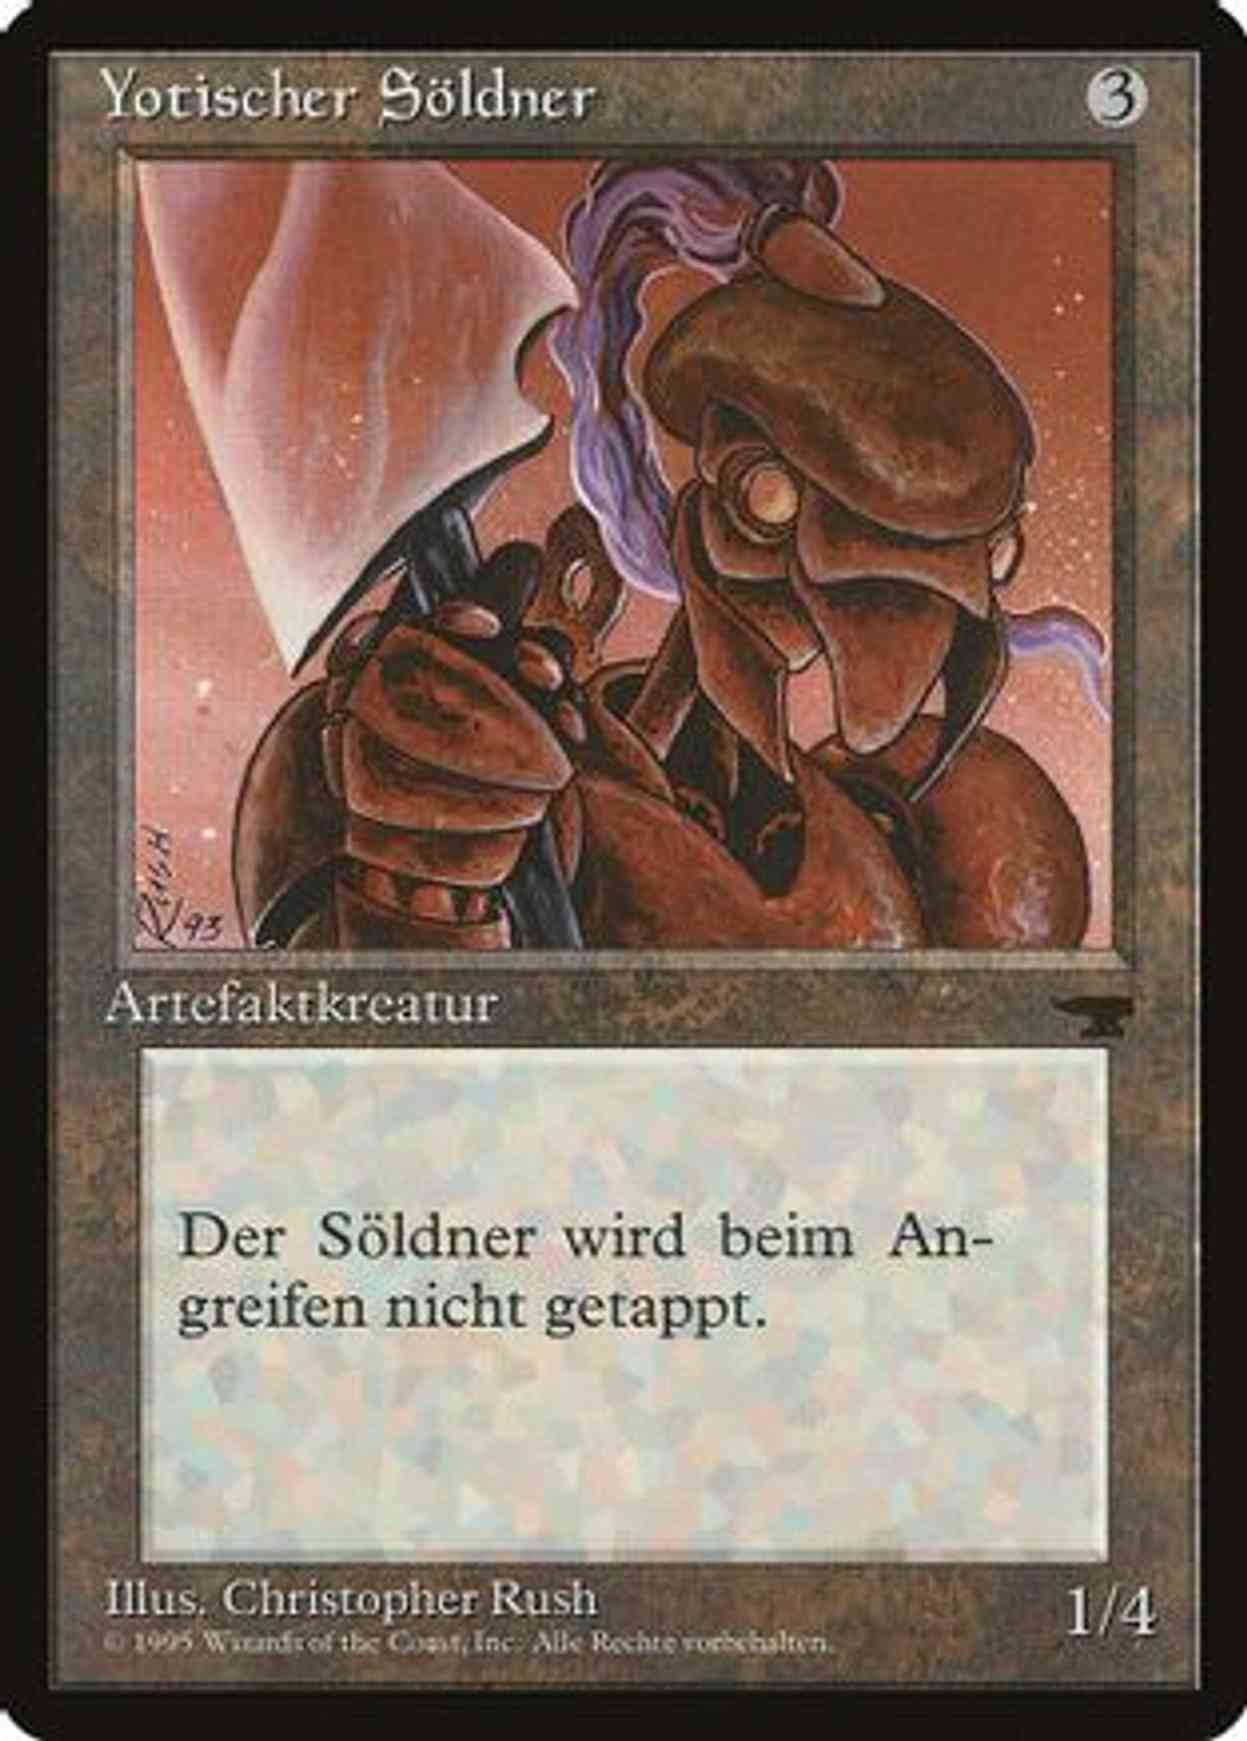 Yotian Soldier (German) - "Yotischer Soldner" magic card front